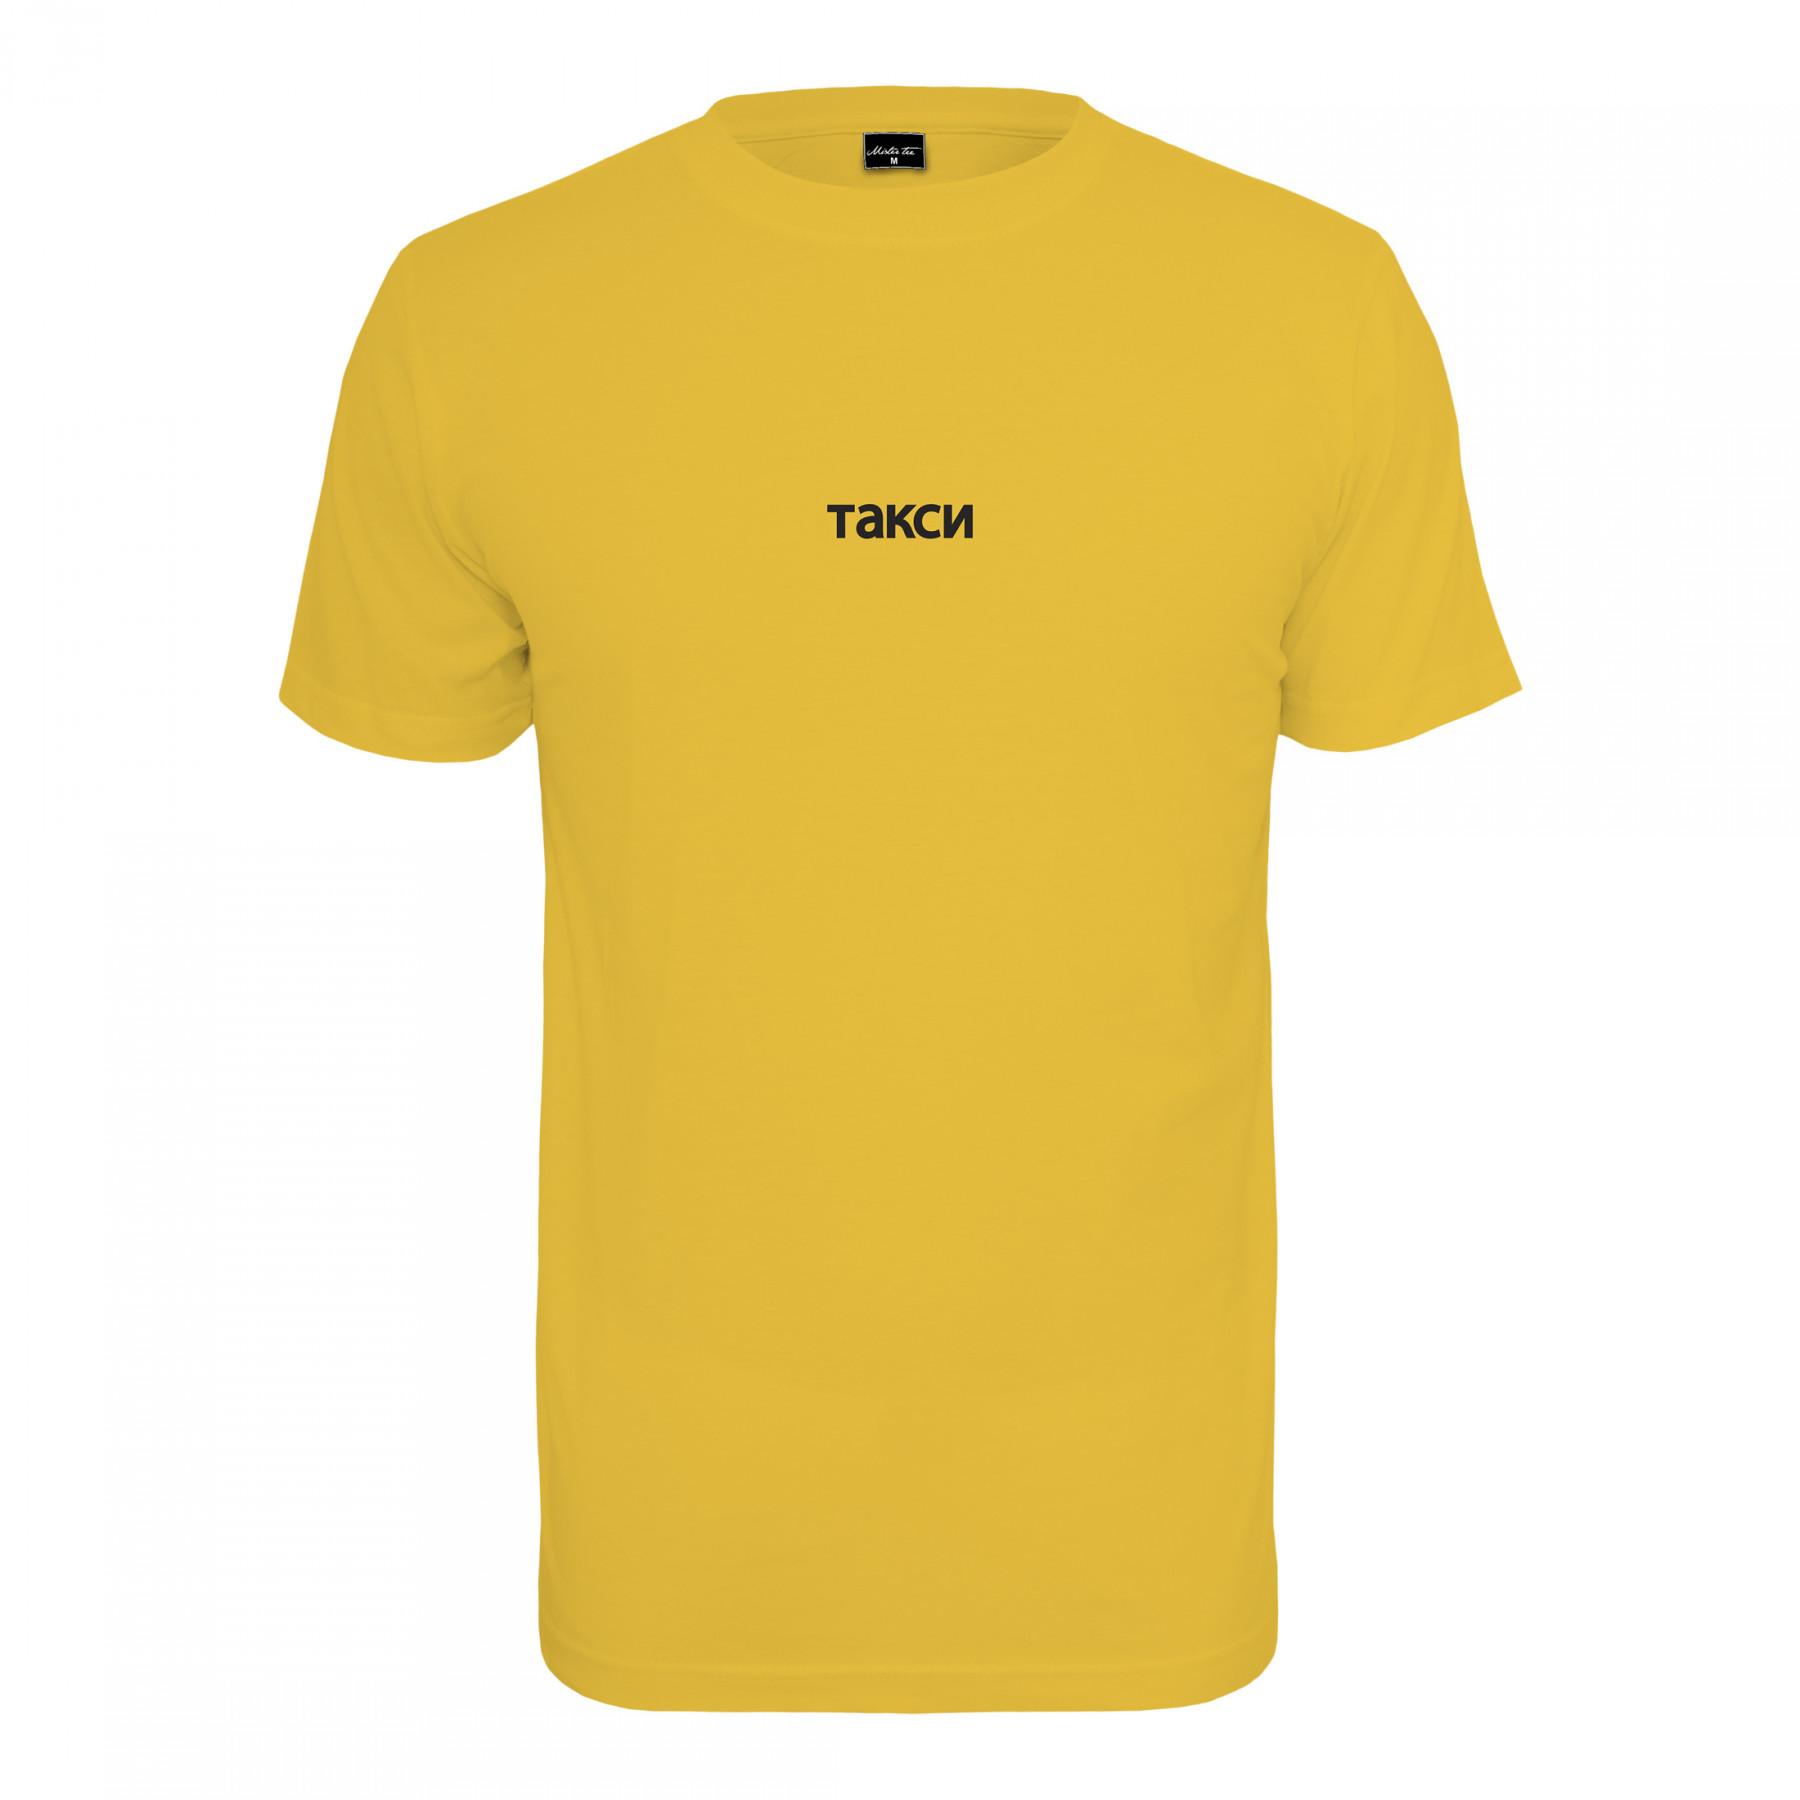 T-shirt Mister Tee taxi